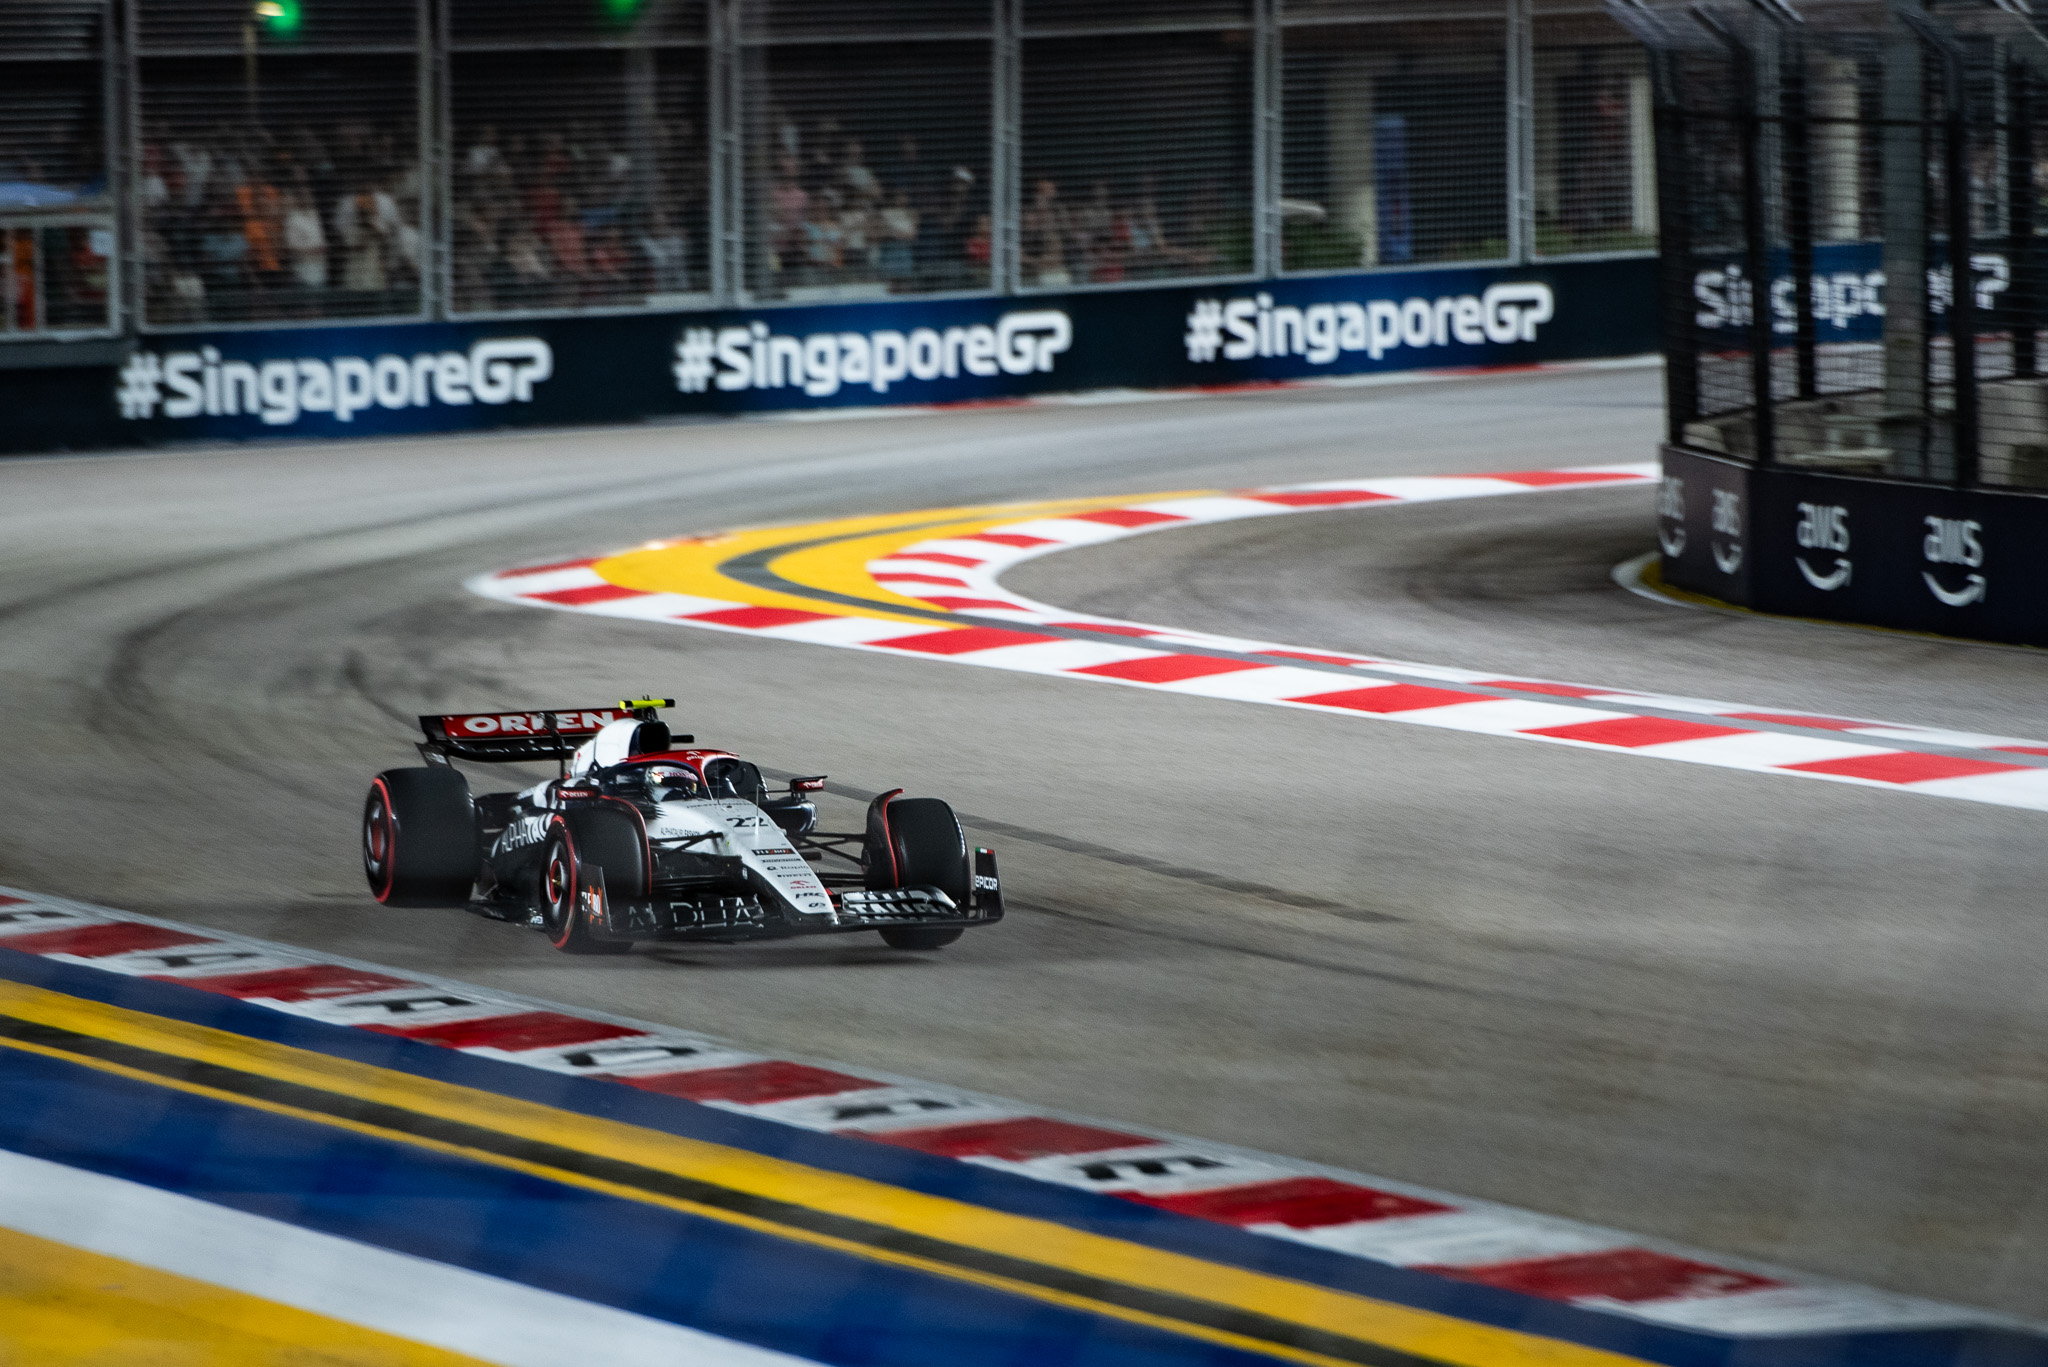 f1, formula 1, singapore gp, singapore night race, f1 singapore, singapore f1, singapore grand prix, sggp, formula 1 night race, ferrari, carlos sainz, f1, formula 1, formula one, singapore gp, singapore f1, singapore f1 night race, ferrari, ferrari’s carlos sainz starts on pole for the 2023 singapore grand prix